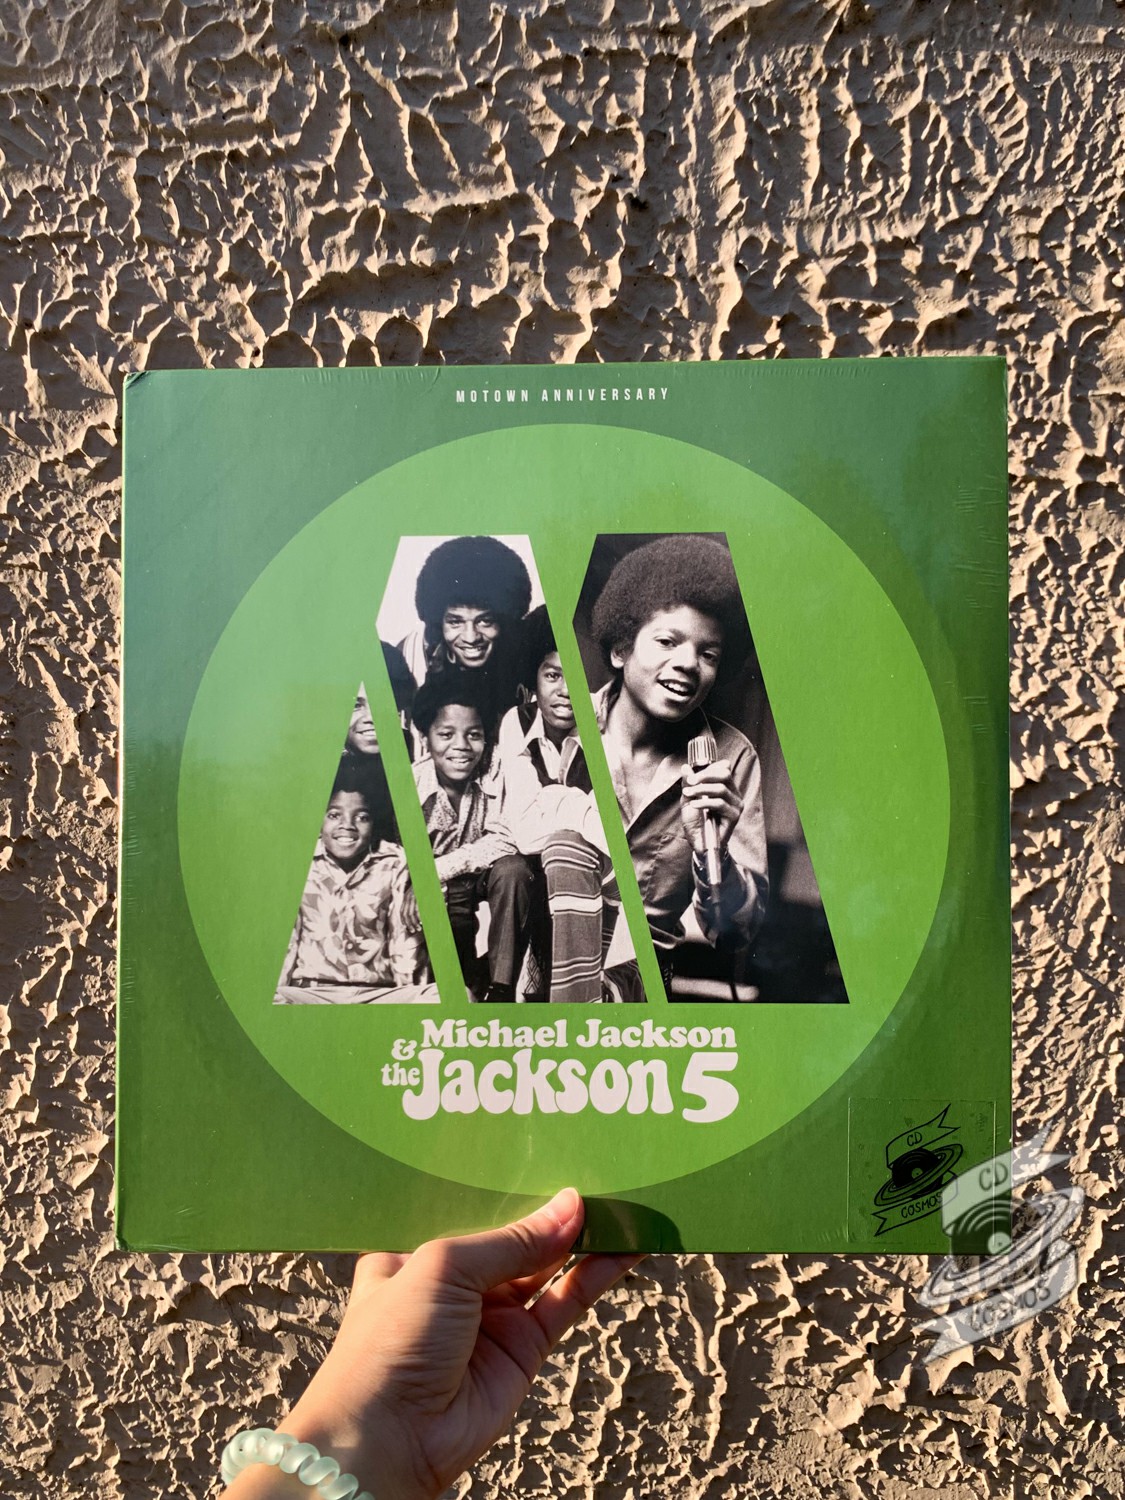 Michael Jackson The Jackson 5 Motown Anniversary